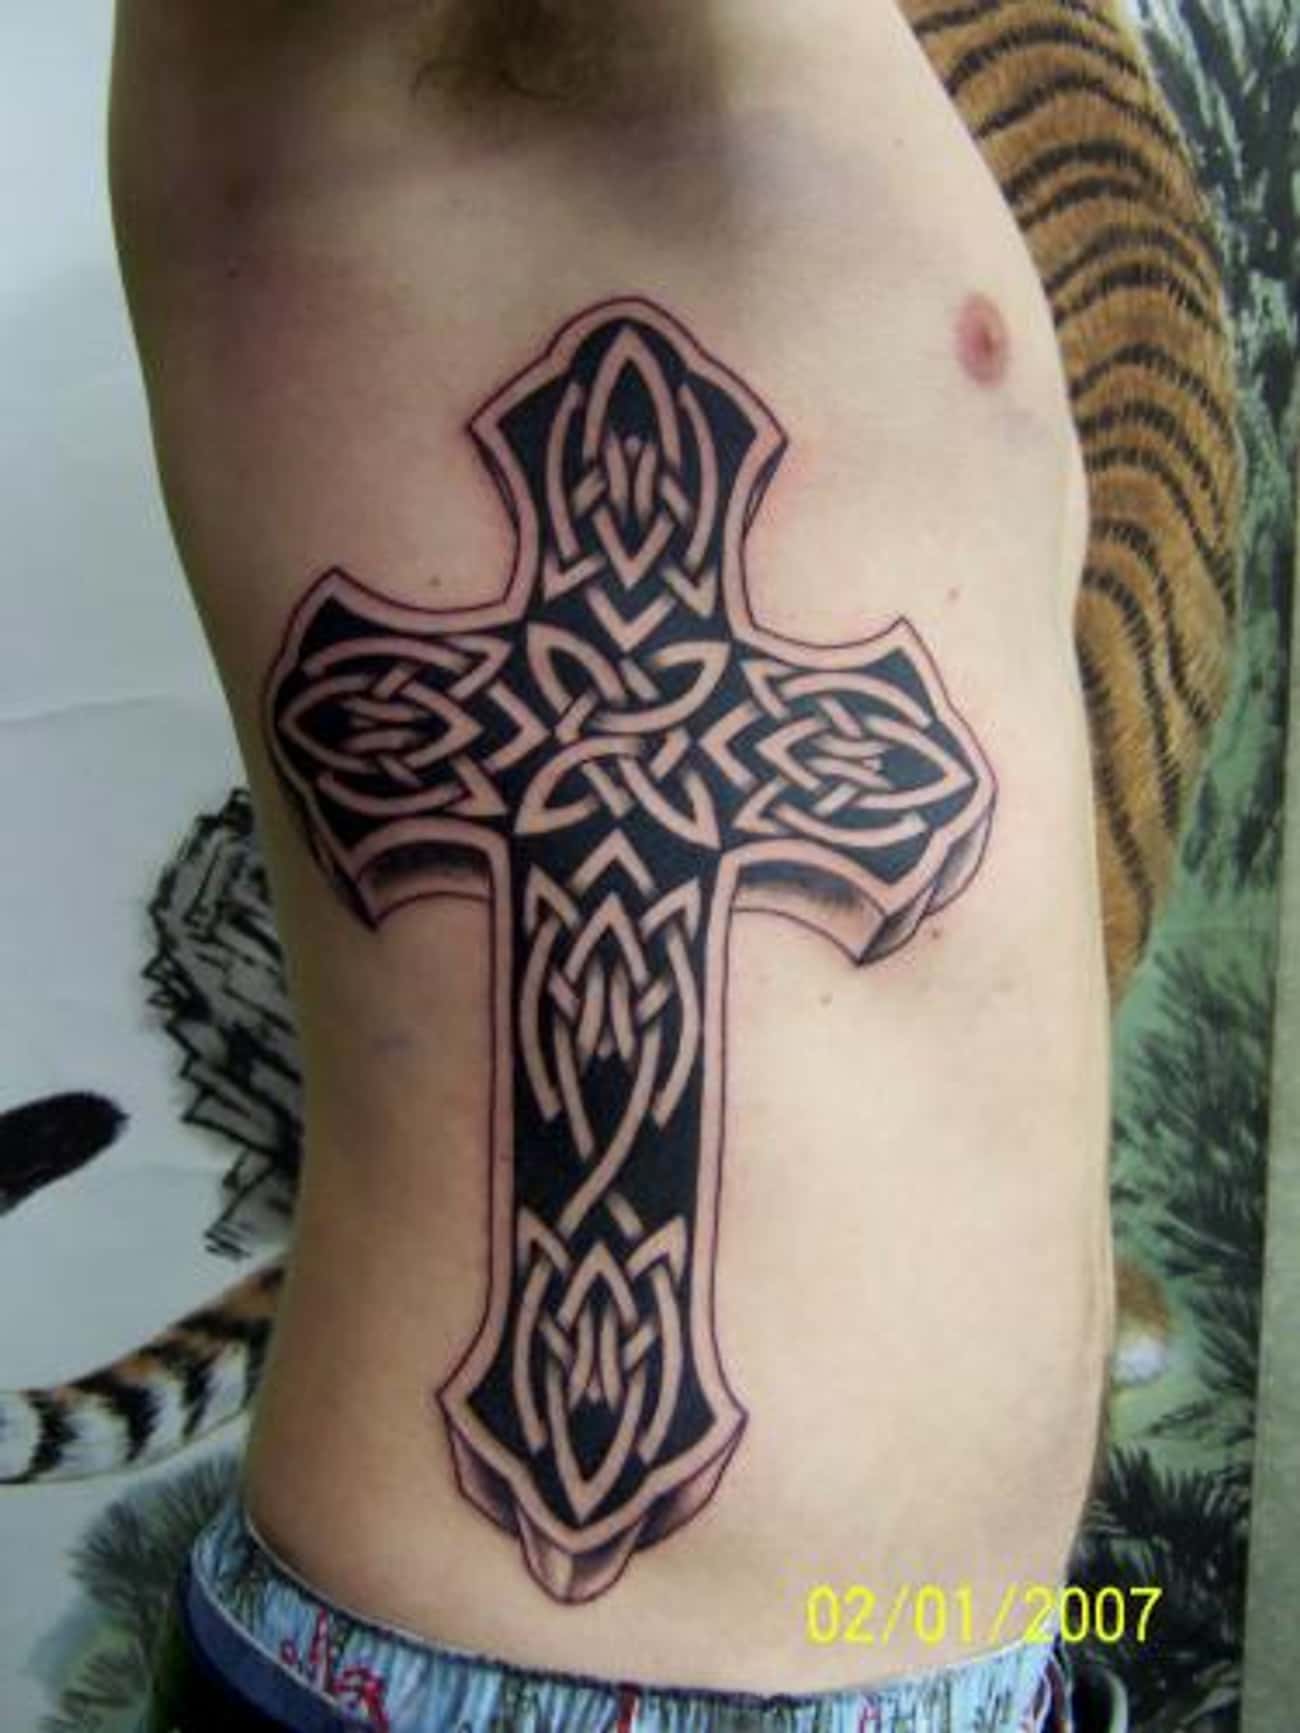 Celtic Cross Tattoos